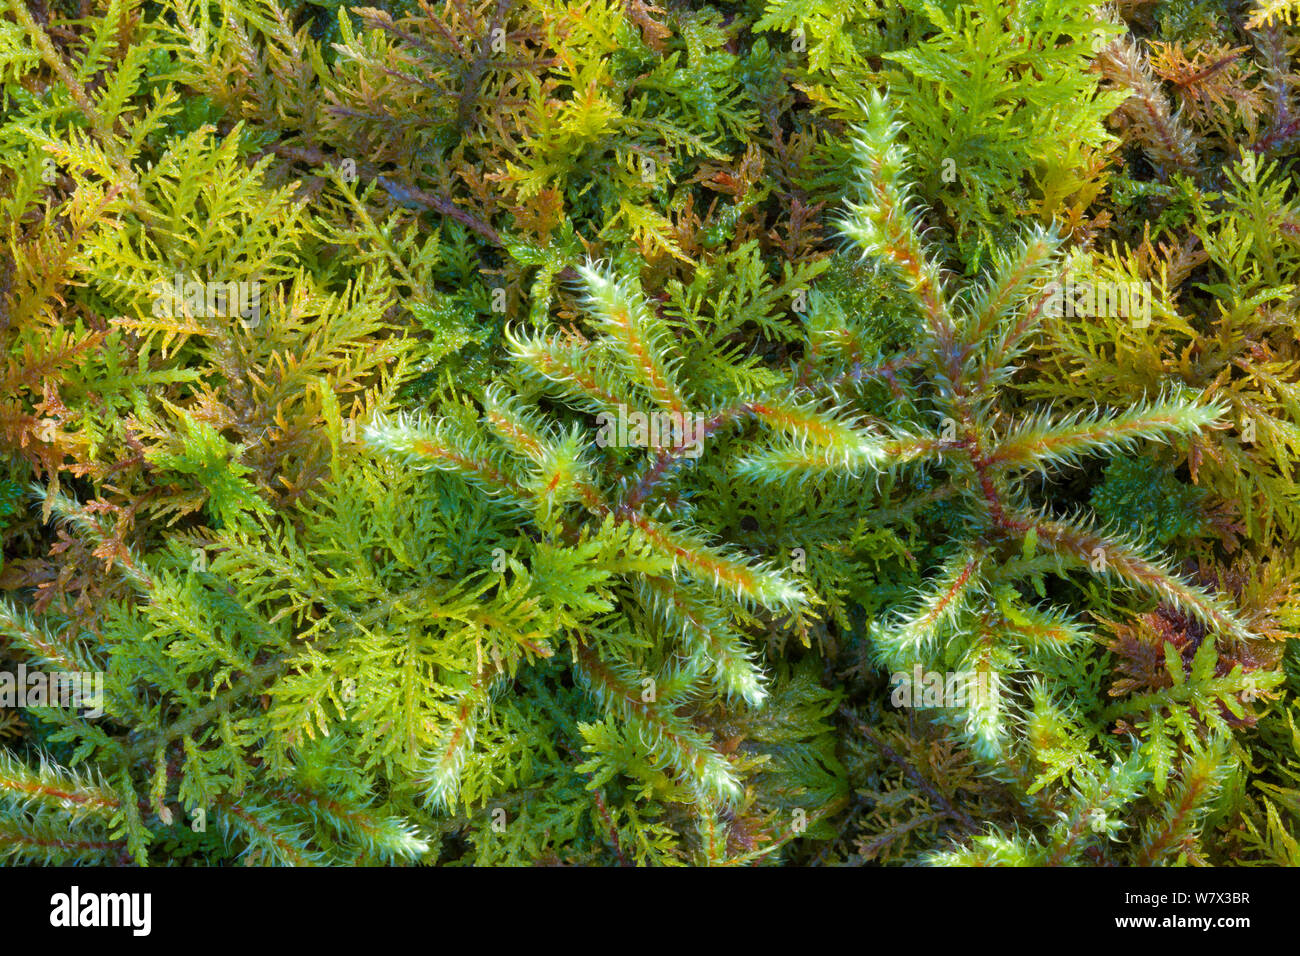 Red-stemmed Feather-moss (Pleurozium schreberi) and Common Tamarisk-moss (Thuidium tamariscinum) growing together in mound. Lake District National Park, Cumbria, UK. February. Stock Photo